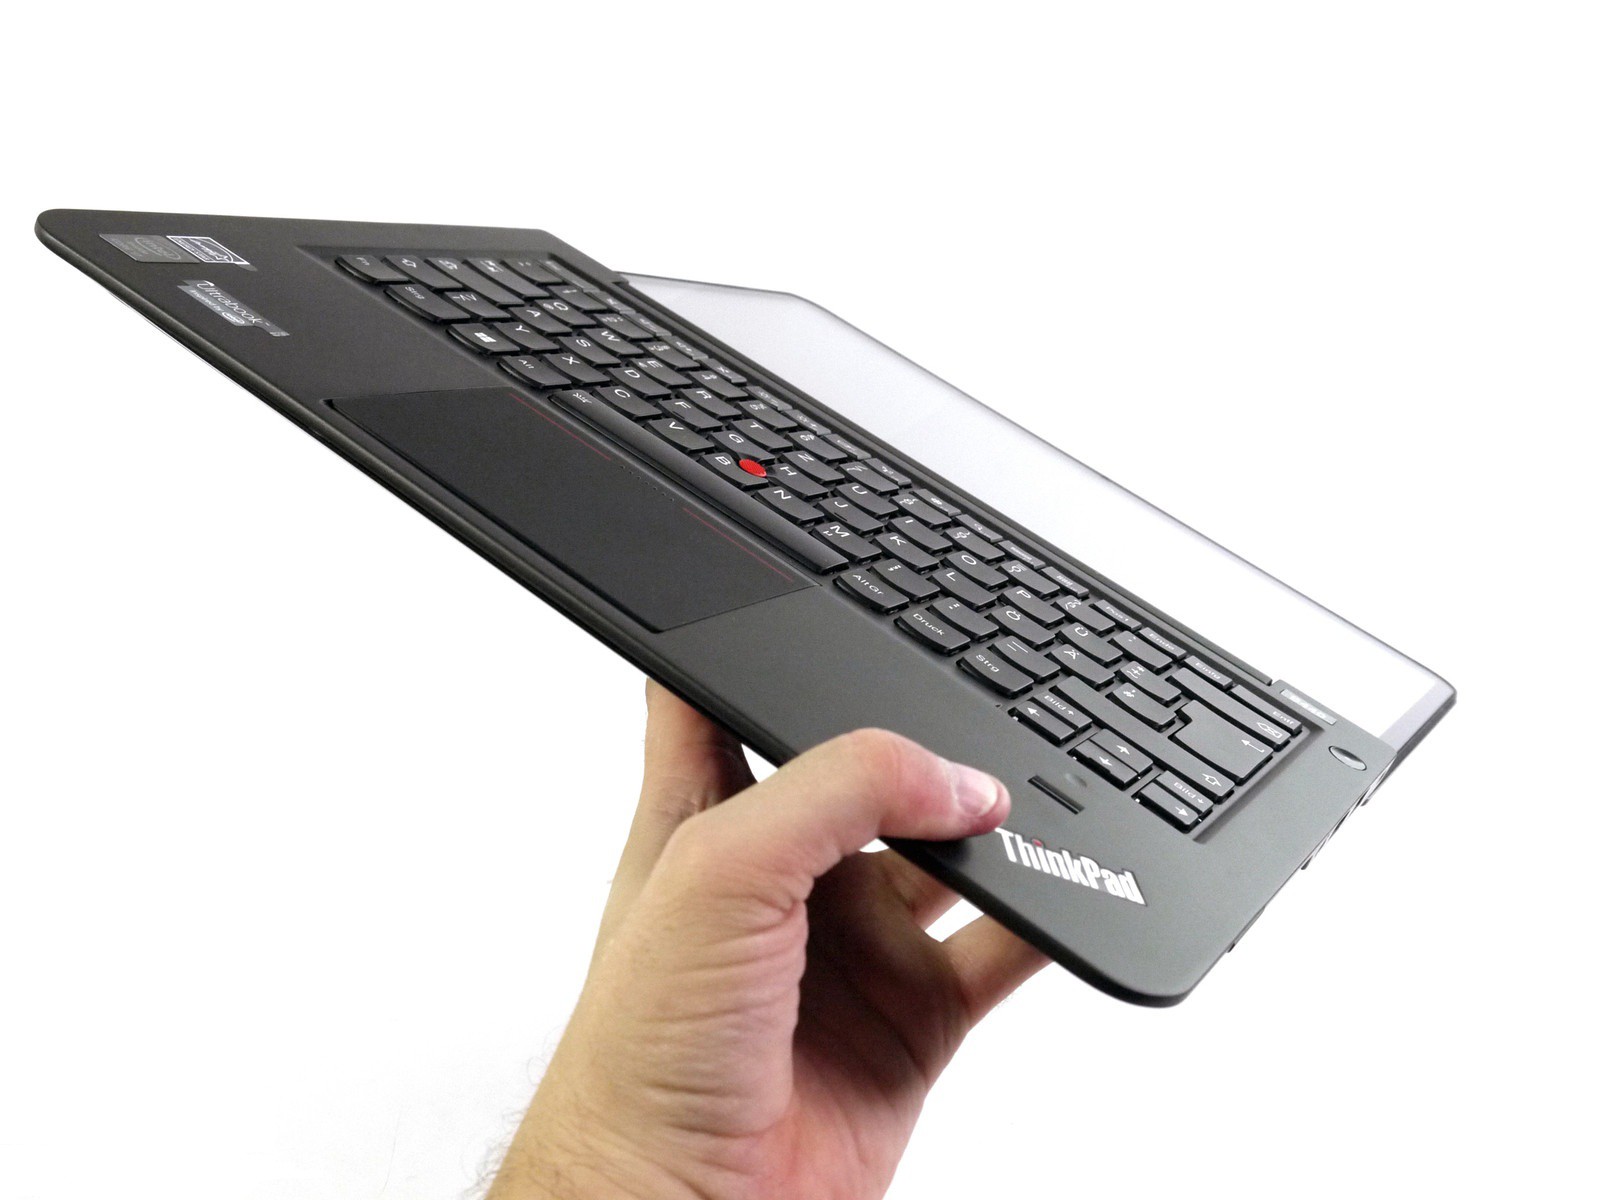 Lenovo ThinkPad S440 i3-4010U, 4 GB, 500 GB, Intel HD Graphics 4400, 